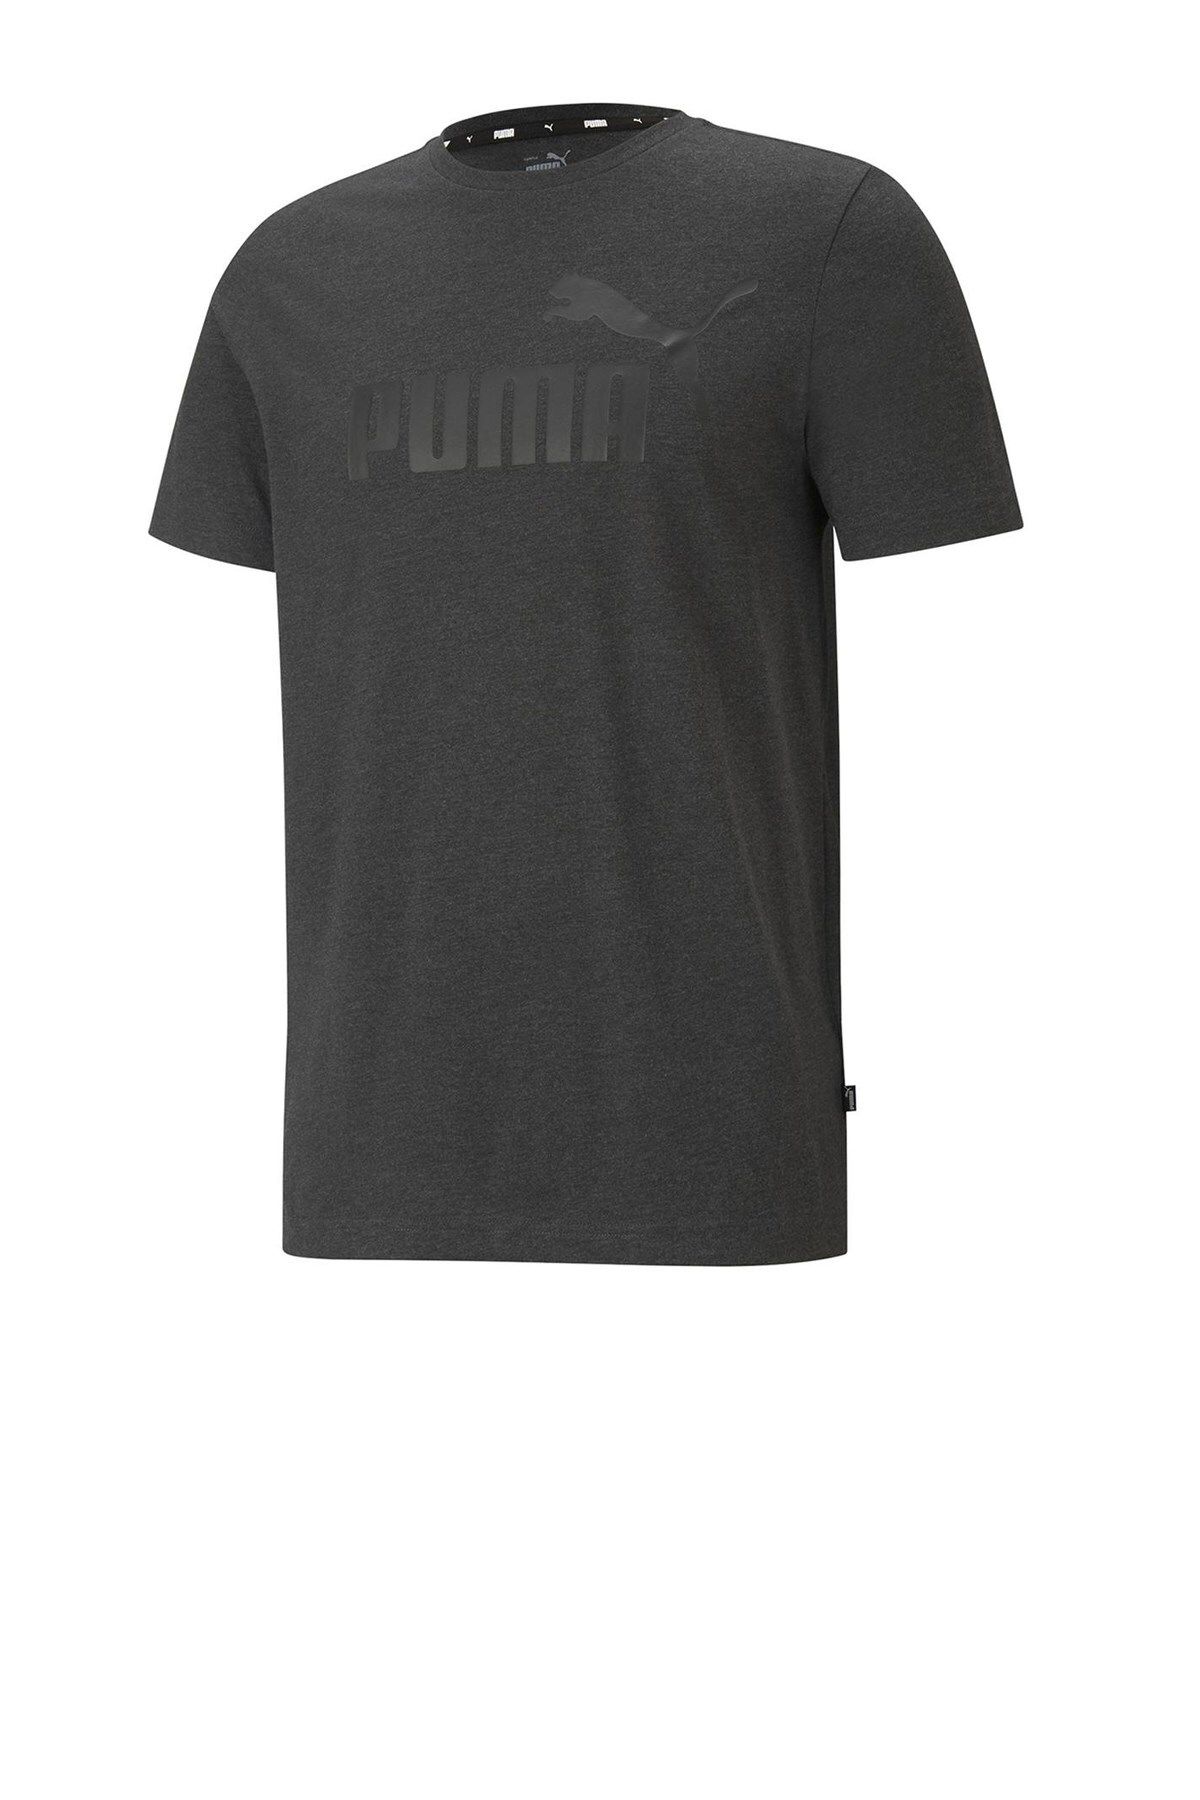 Puma Ess Heather Men\'s T-Shirt - Trendyol 58673607